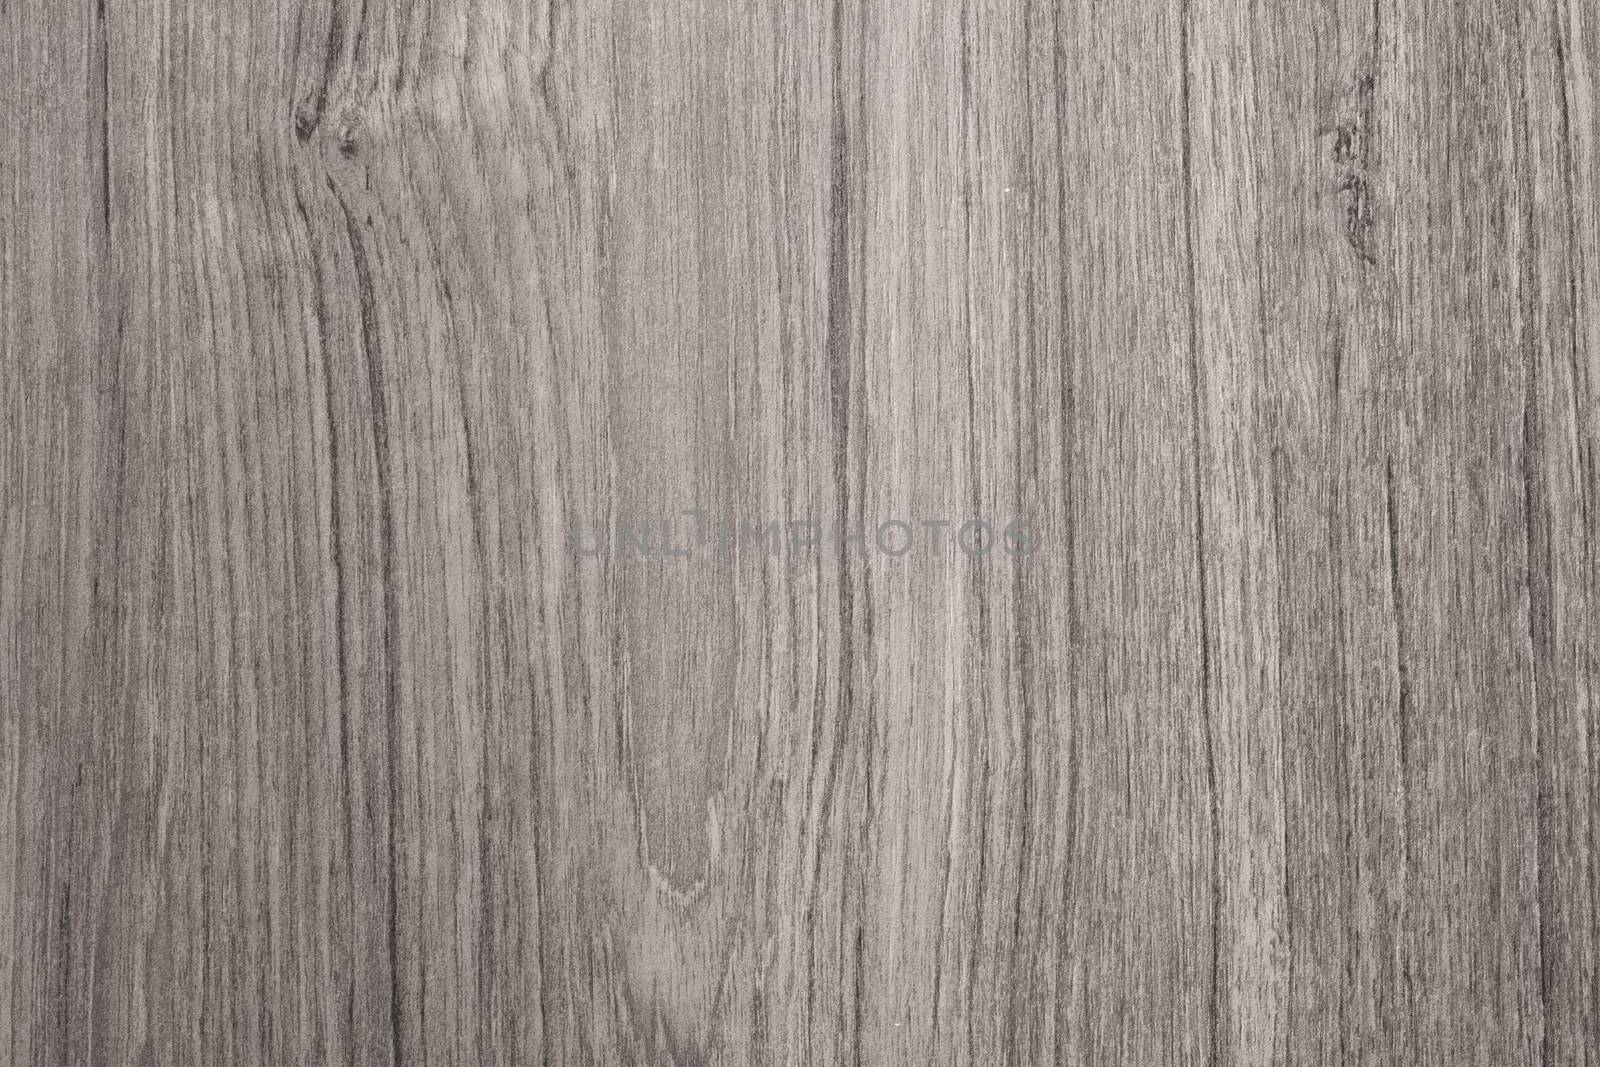 wooden texture by elwynn